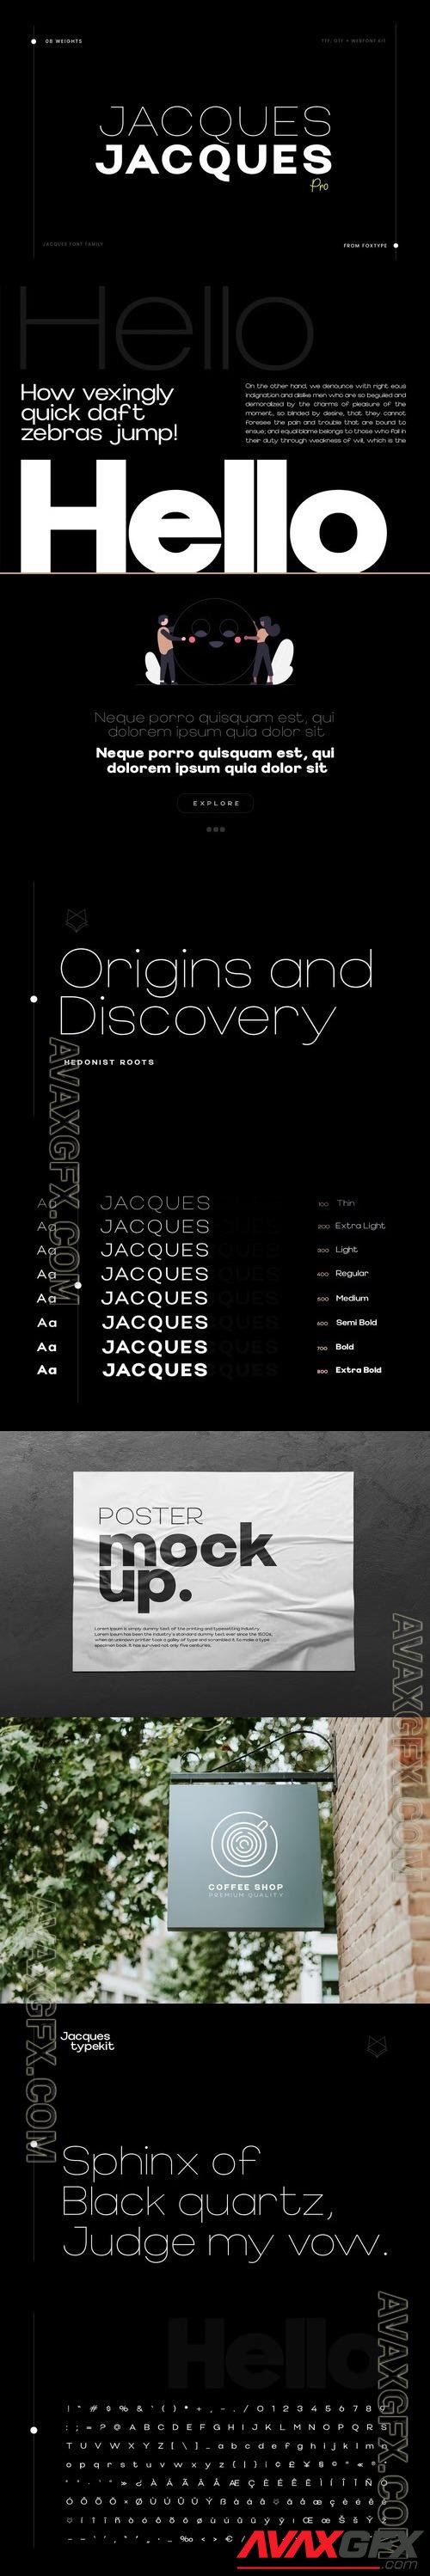 Jacques Pro Display Typeface J86VTE8